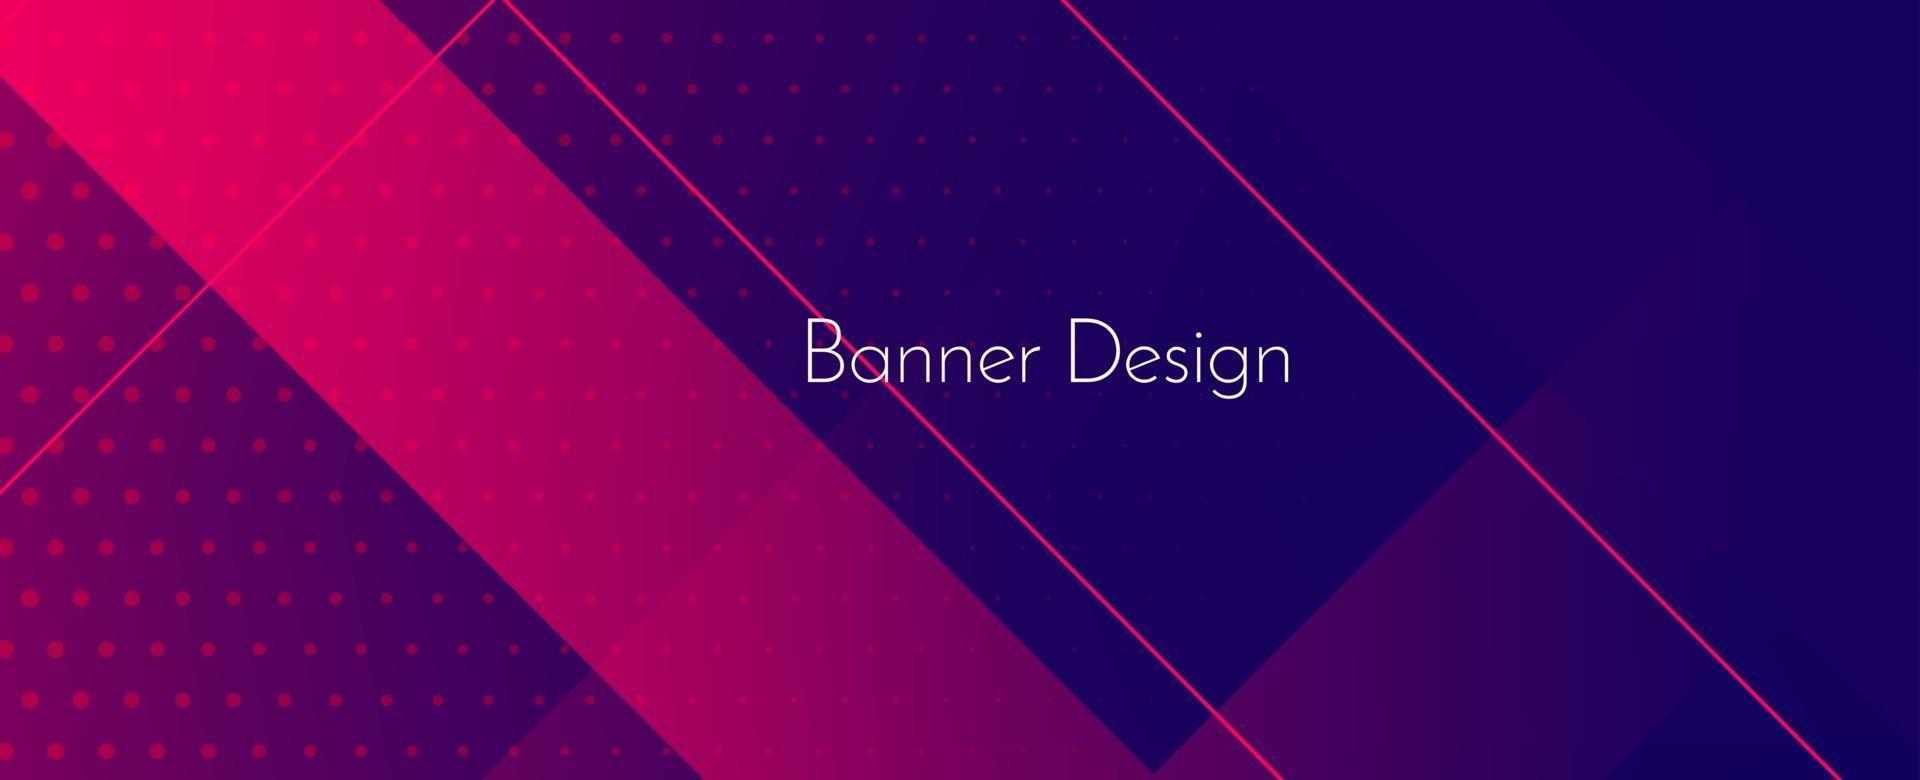 Abstract geometric purple modern stylish smooth dark banner background vector